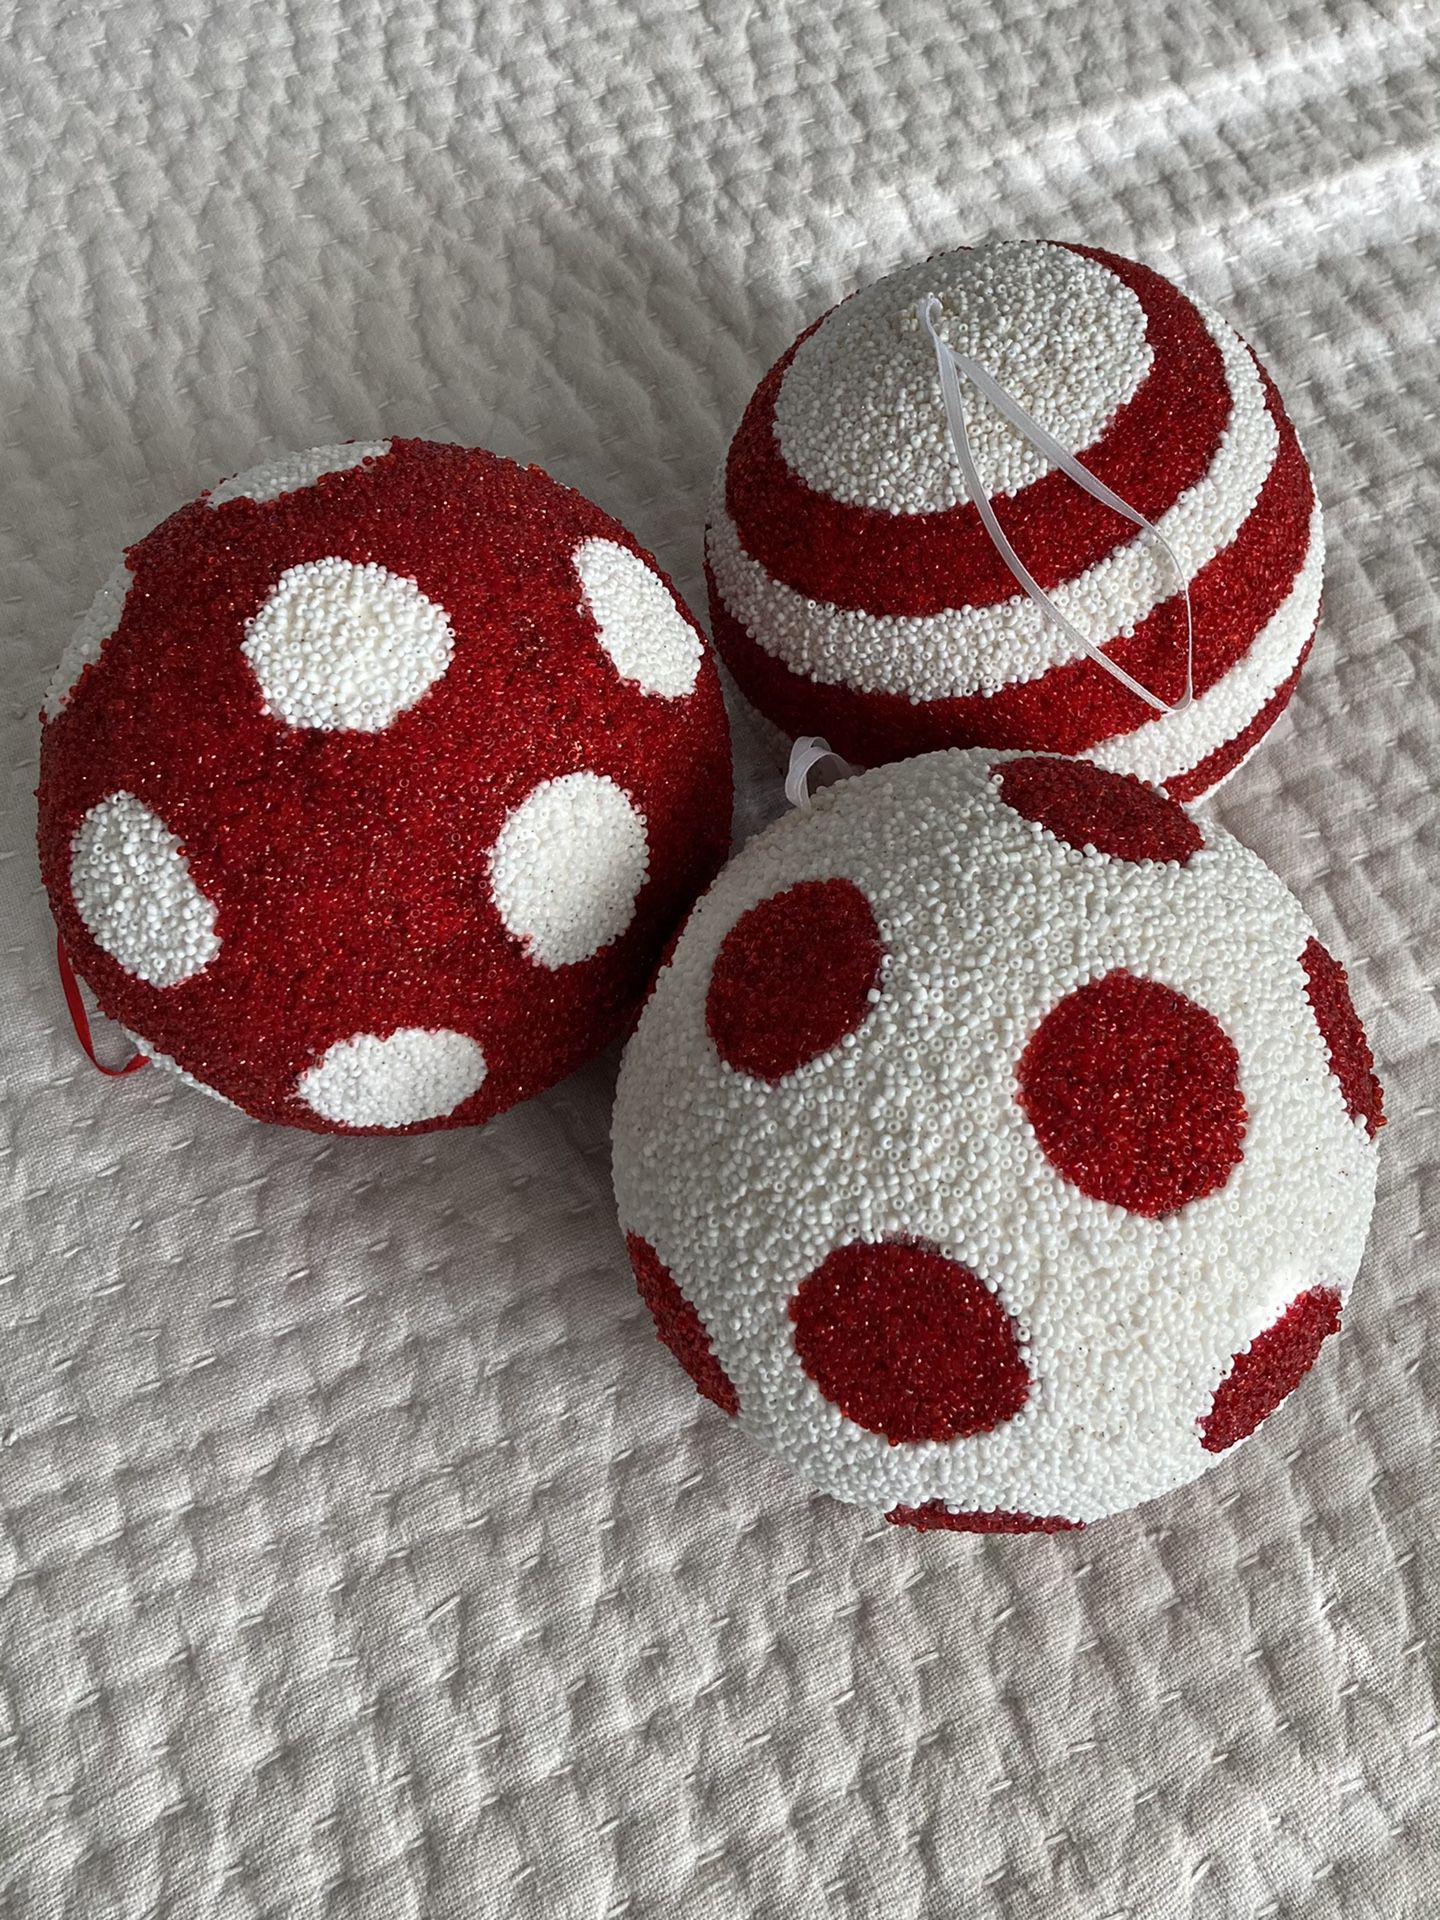 Christmas decorations 6” Diameter Balls